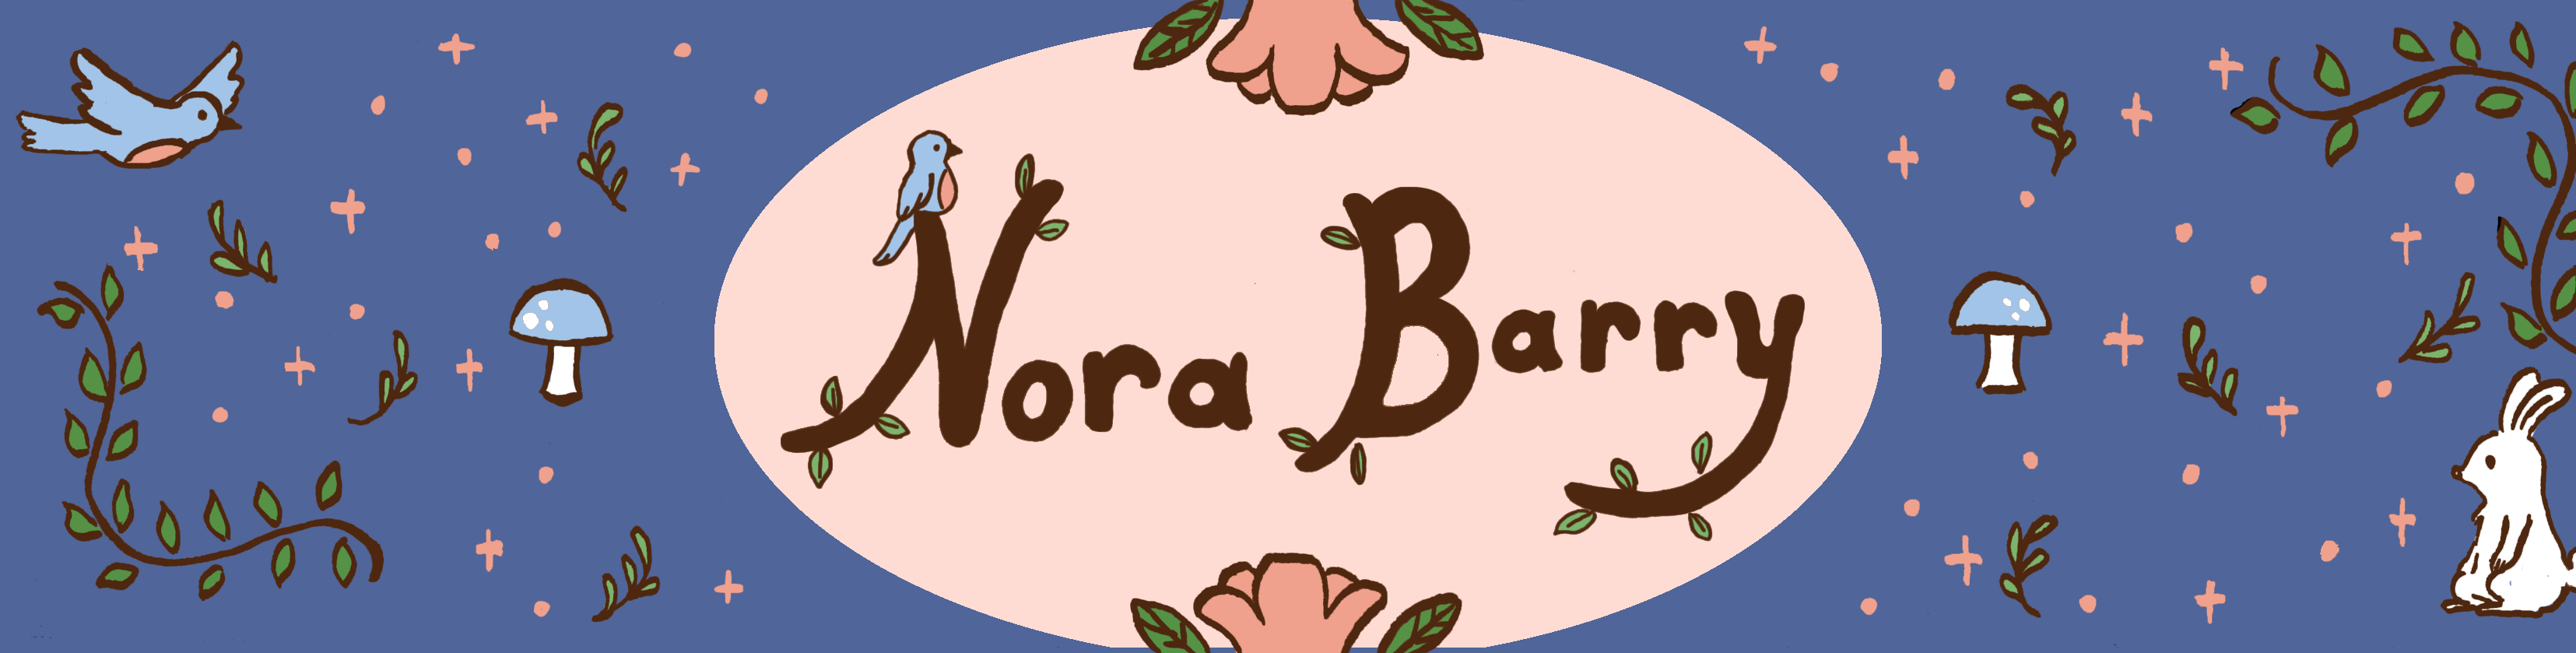 Nora Barry